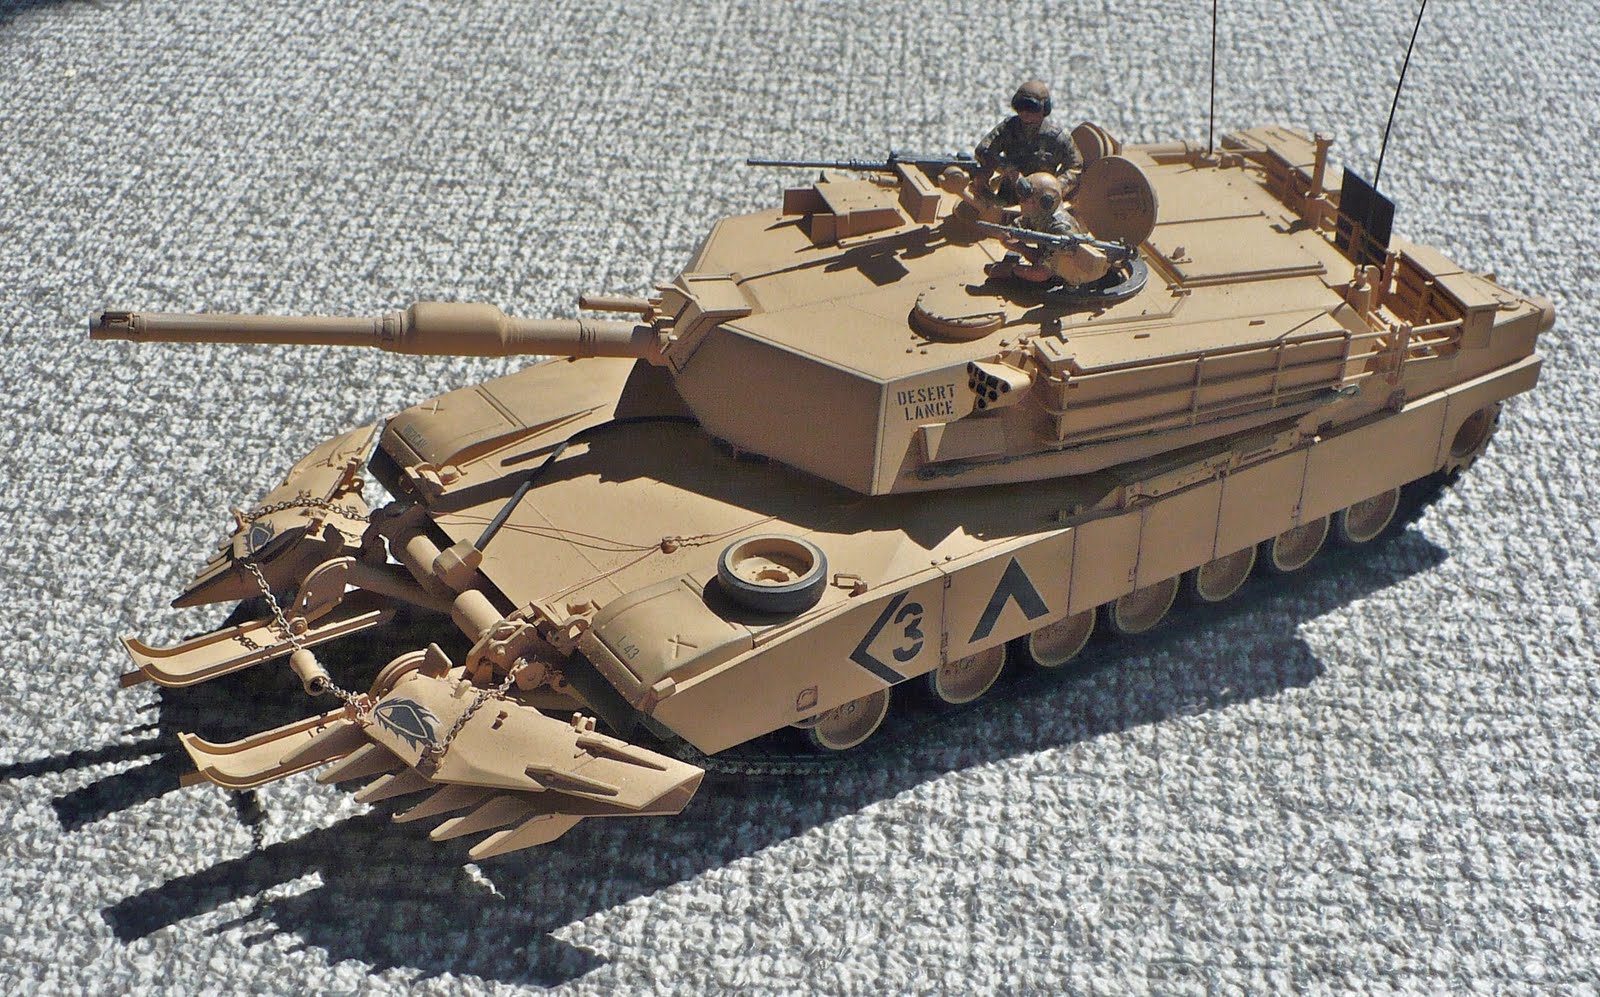 Сколько стоит абрамс в рублях цена. M1a2 Abrams. М1 Абрамс. M1a1 Abrams. Abrams m1a3 броня.